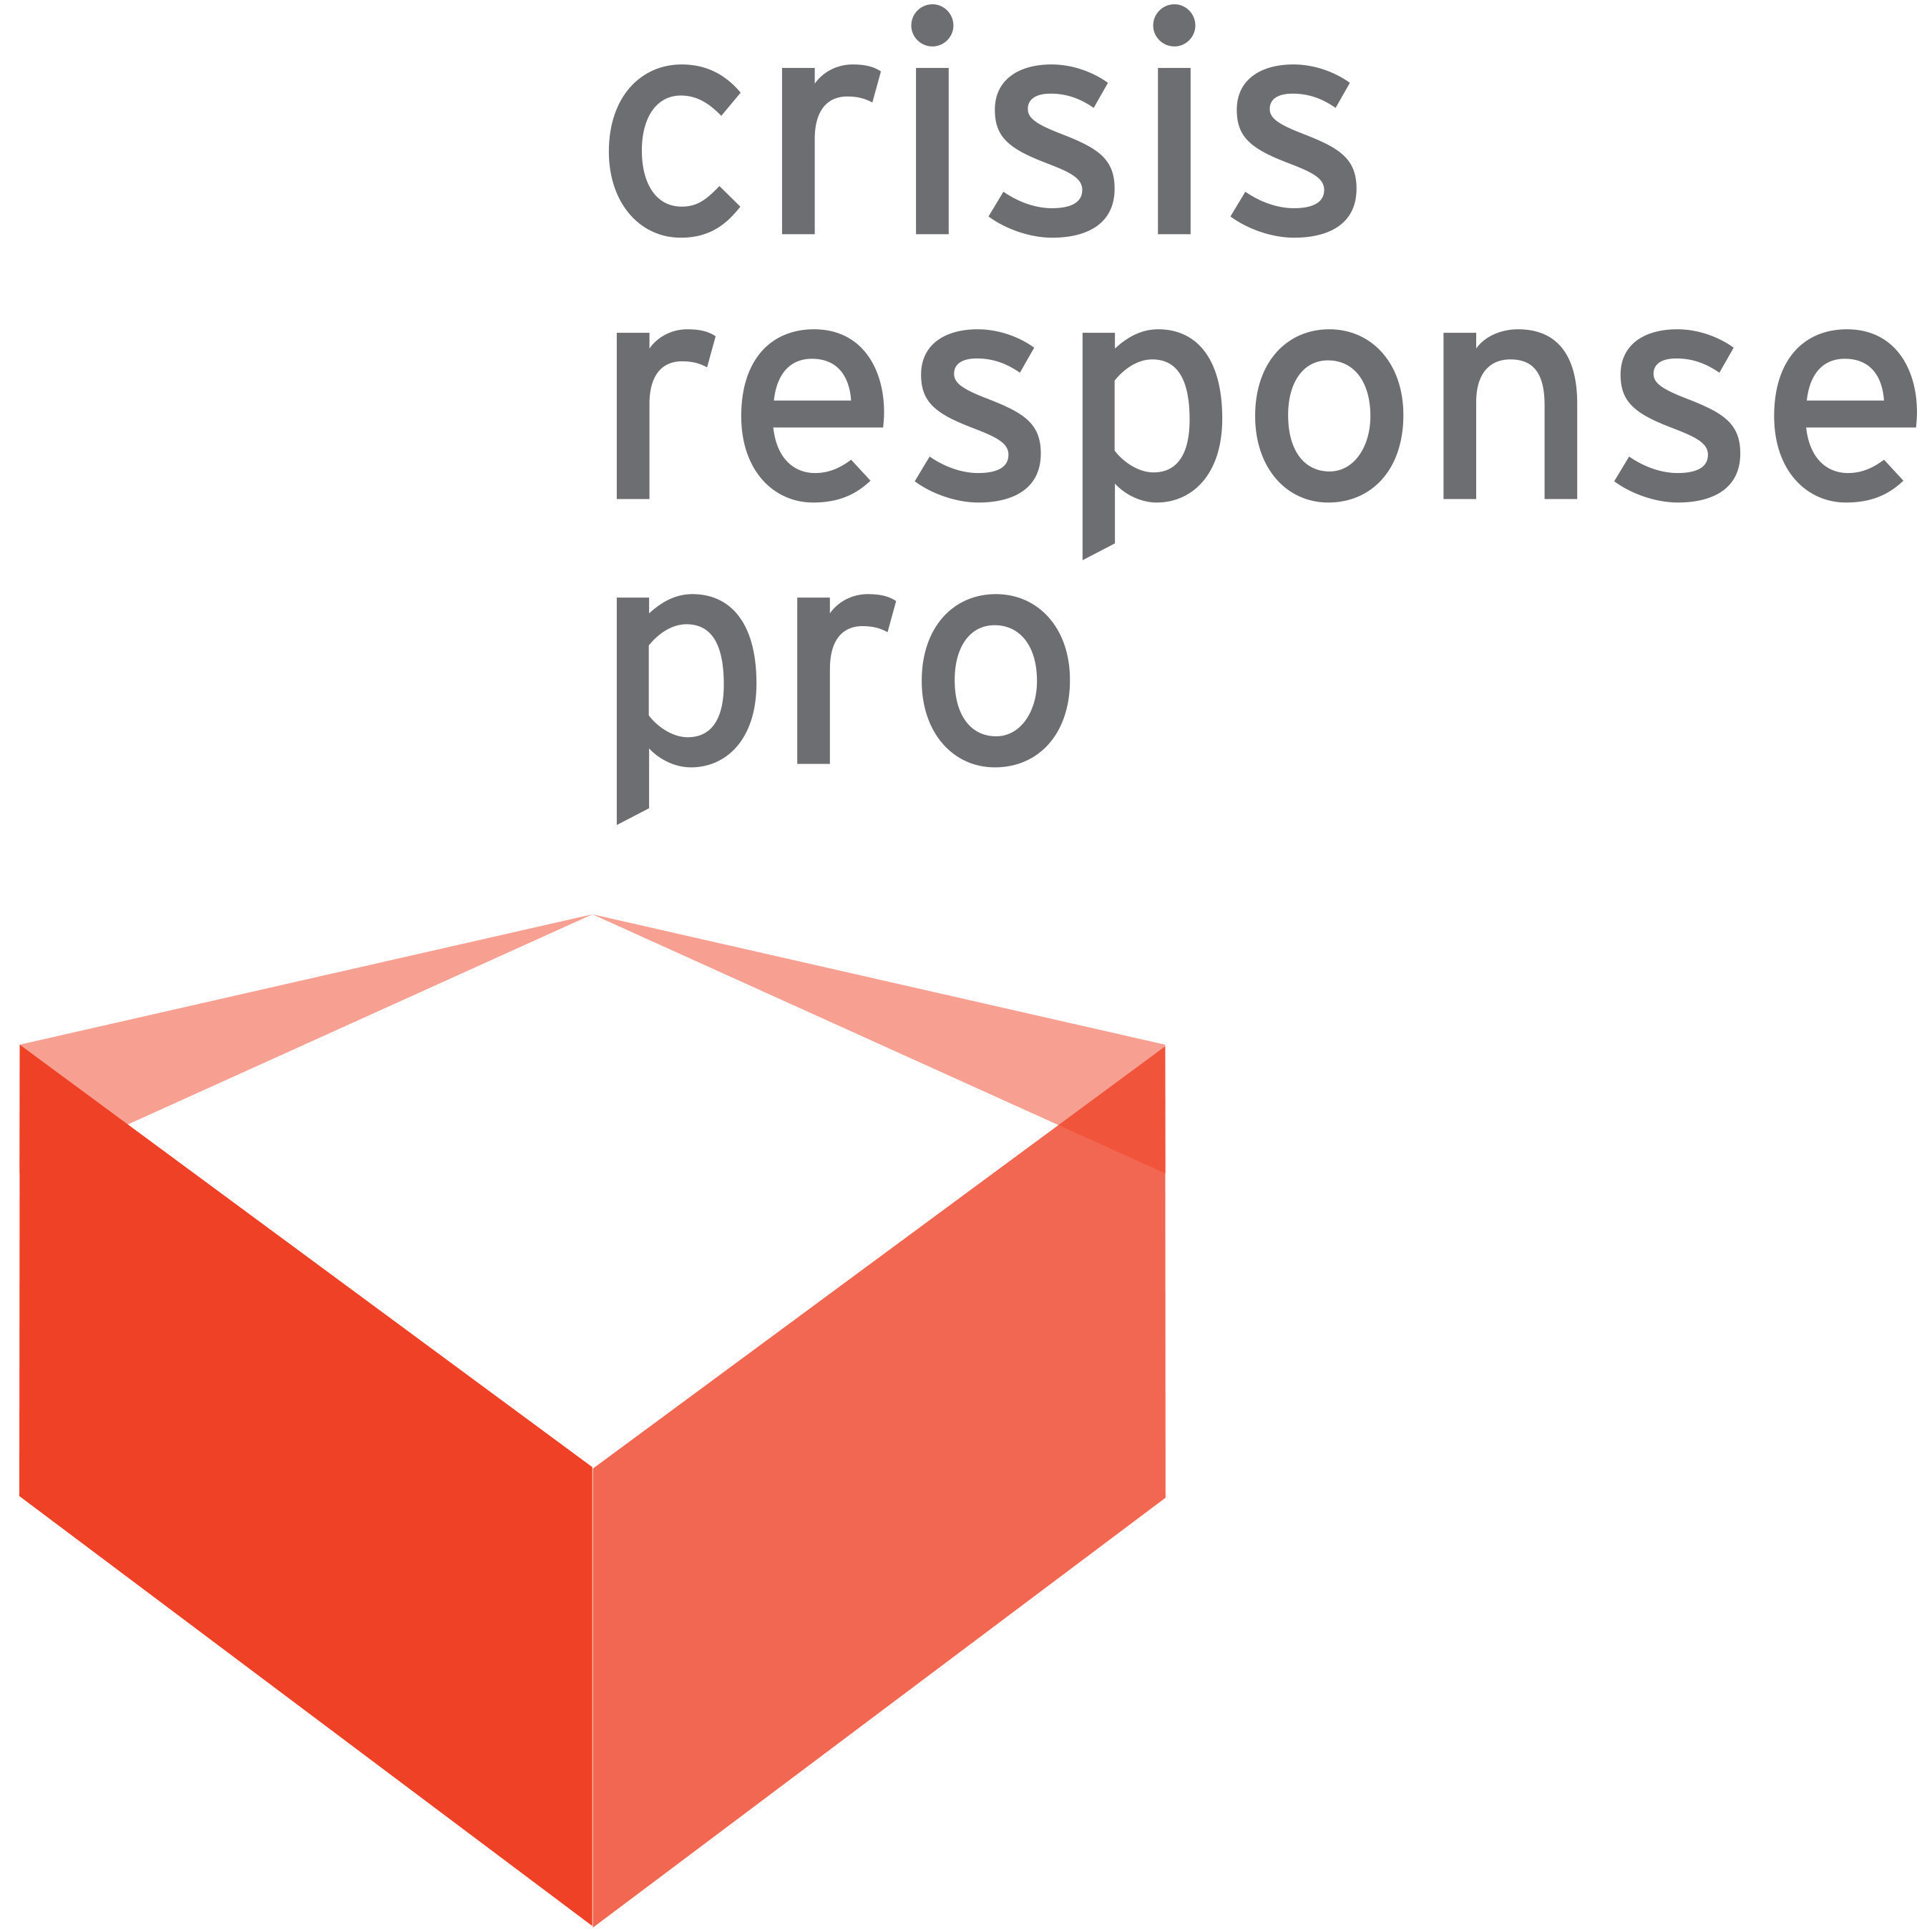 CrisisResponsePro is a secure and innovative web-based software for crisis and litigation communications. (www.crisisresponsepro.com)